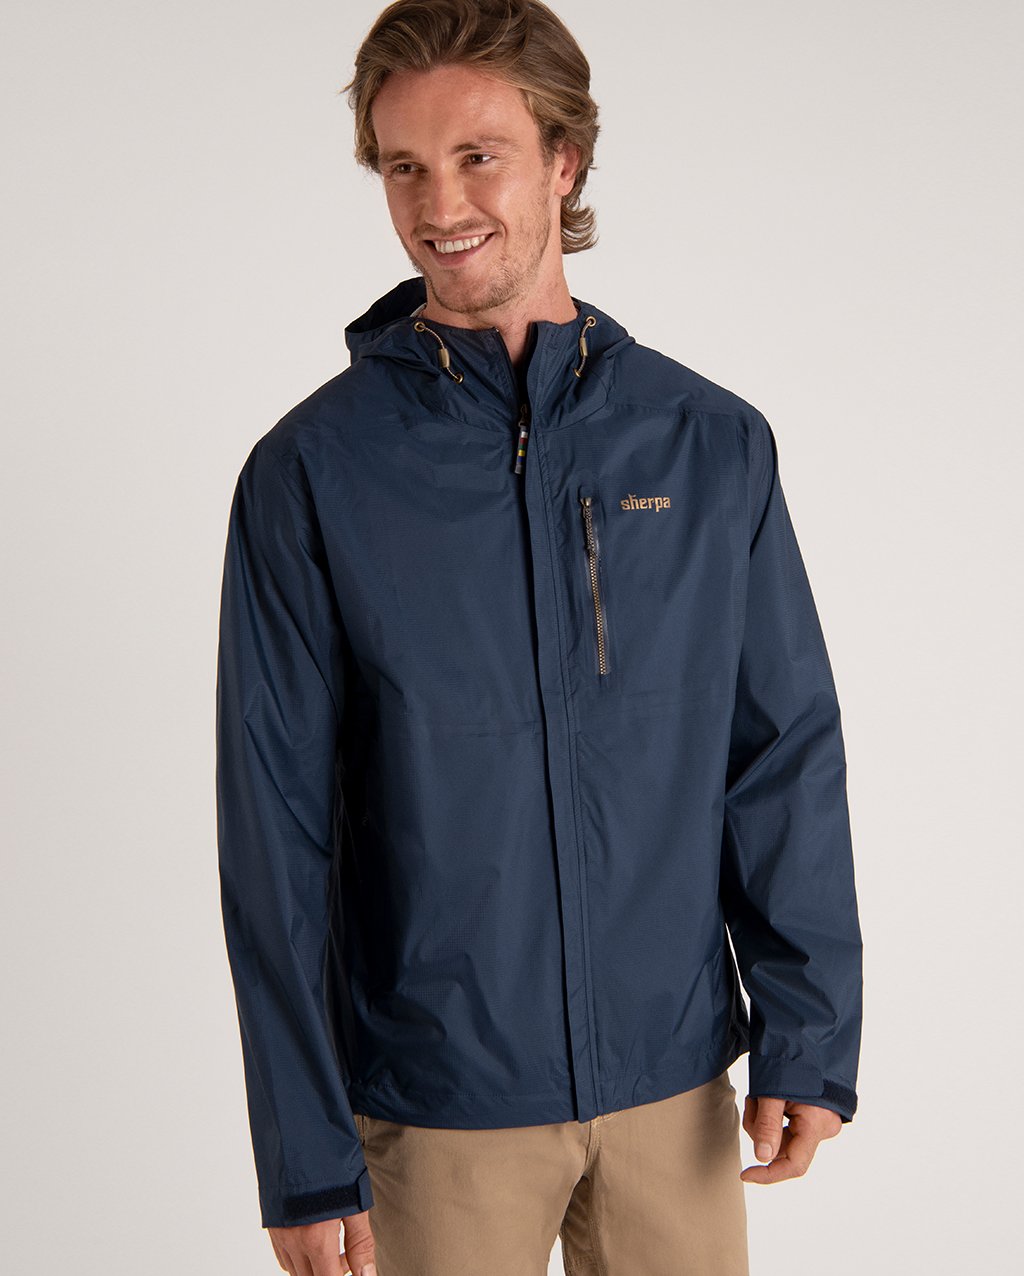 Sherpa Men's Kunde 2.5 Layer Jacket